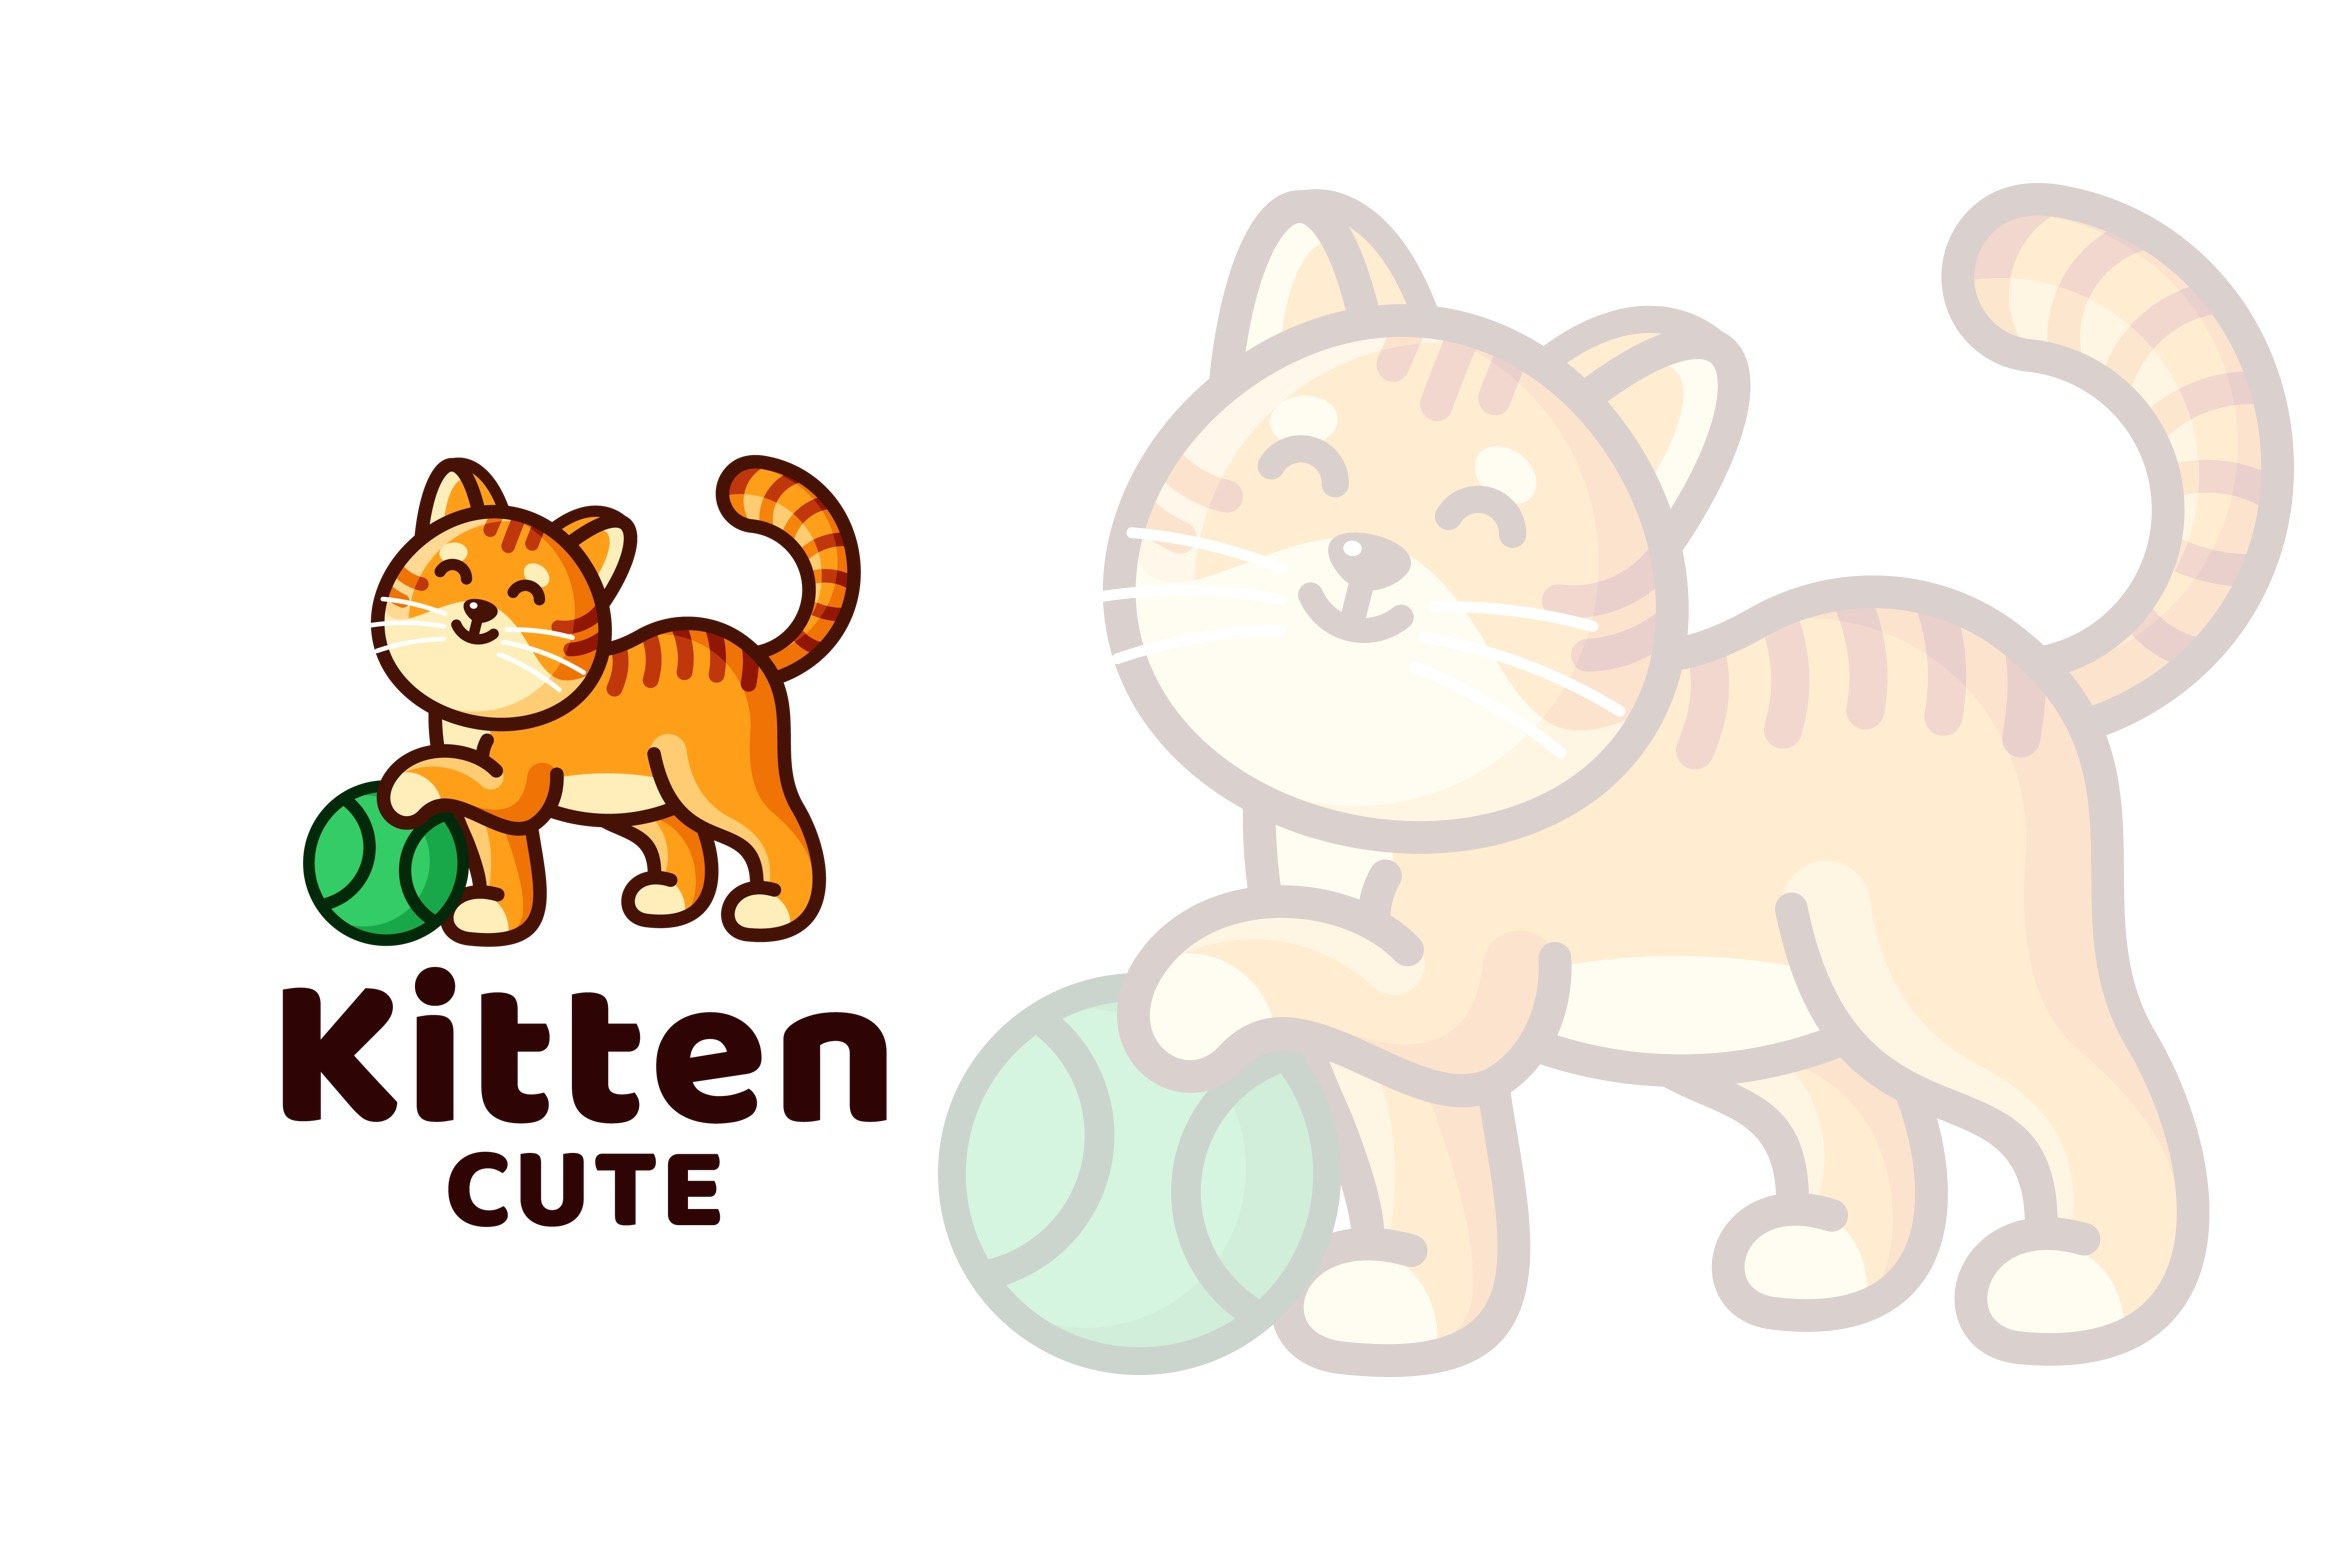 Kitten Cute Kids Logo Template cover image.